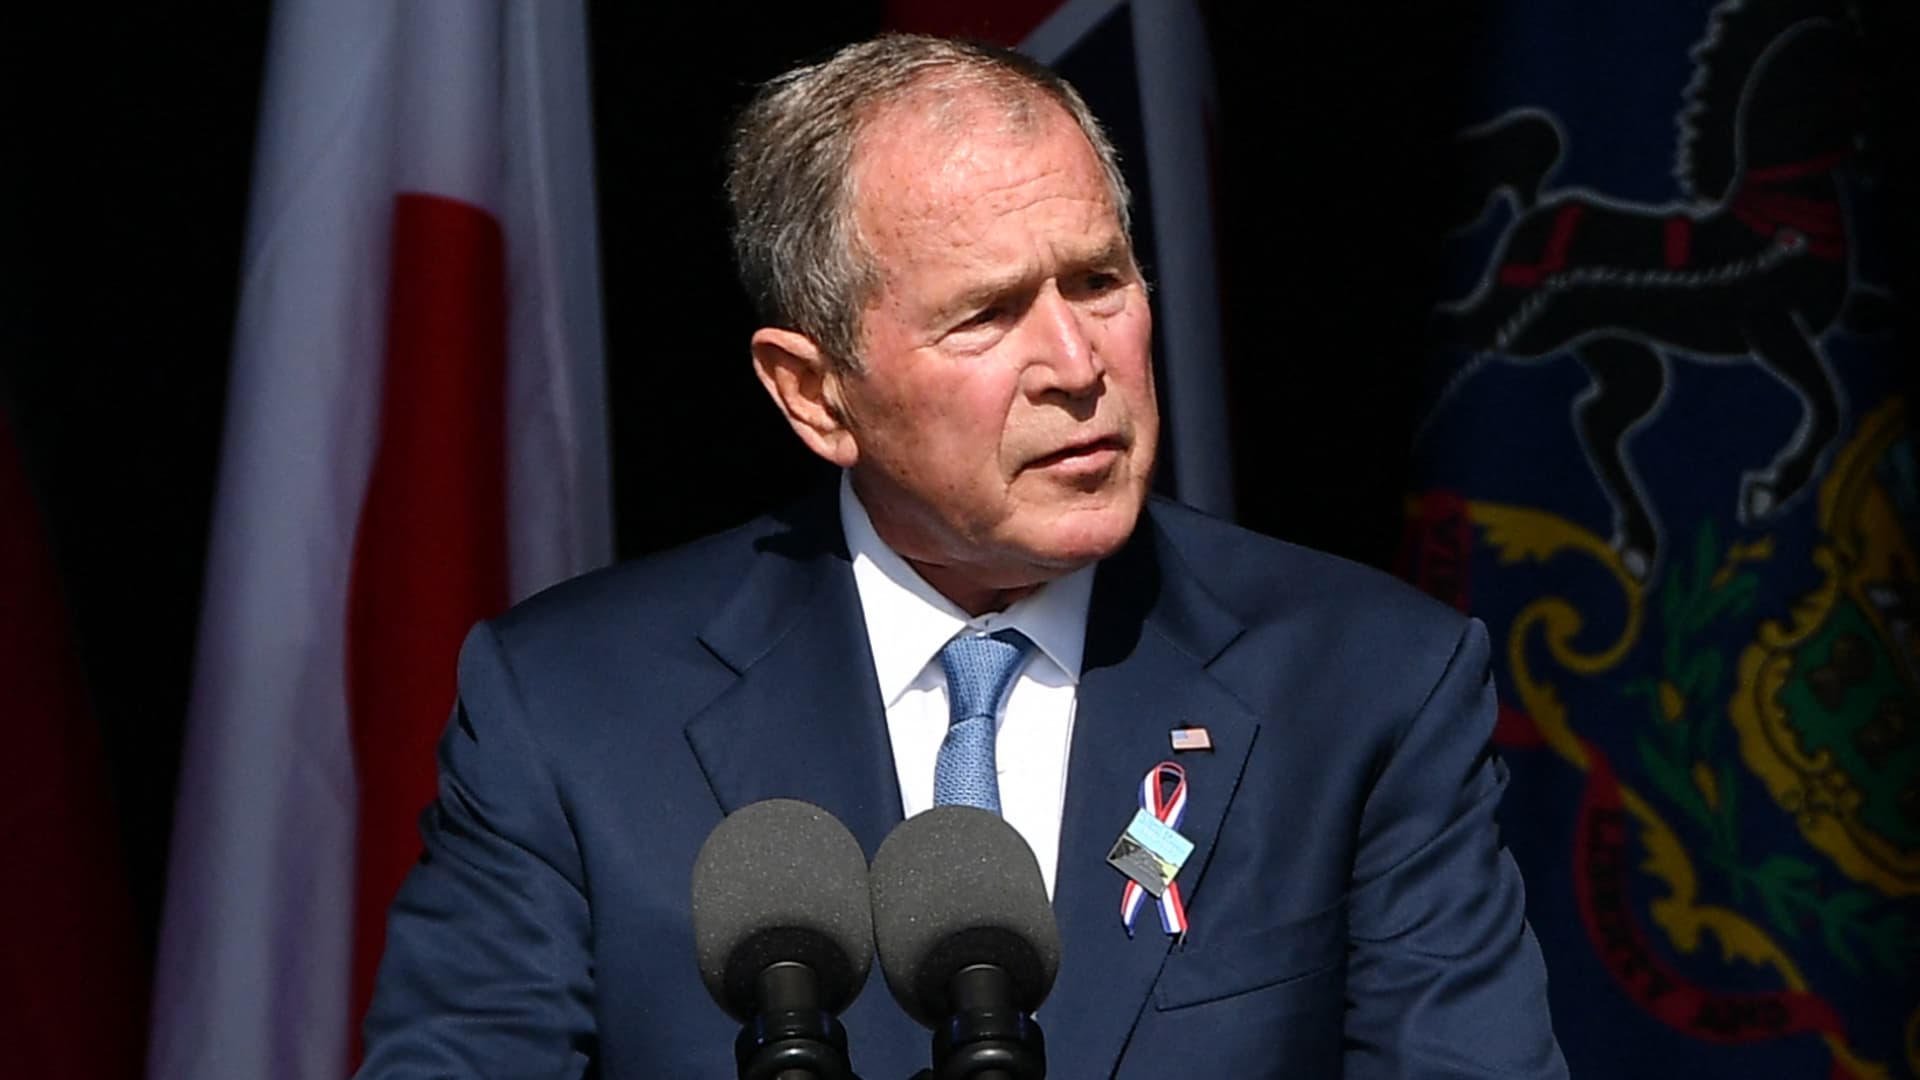 Former US President George W. Bush speaks during a 9/11 commemoration at the Flight 93 National Memorial in Shanksville, Pennsylvania on September 11, 2021.